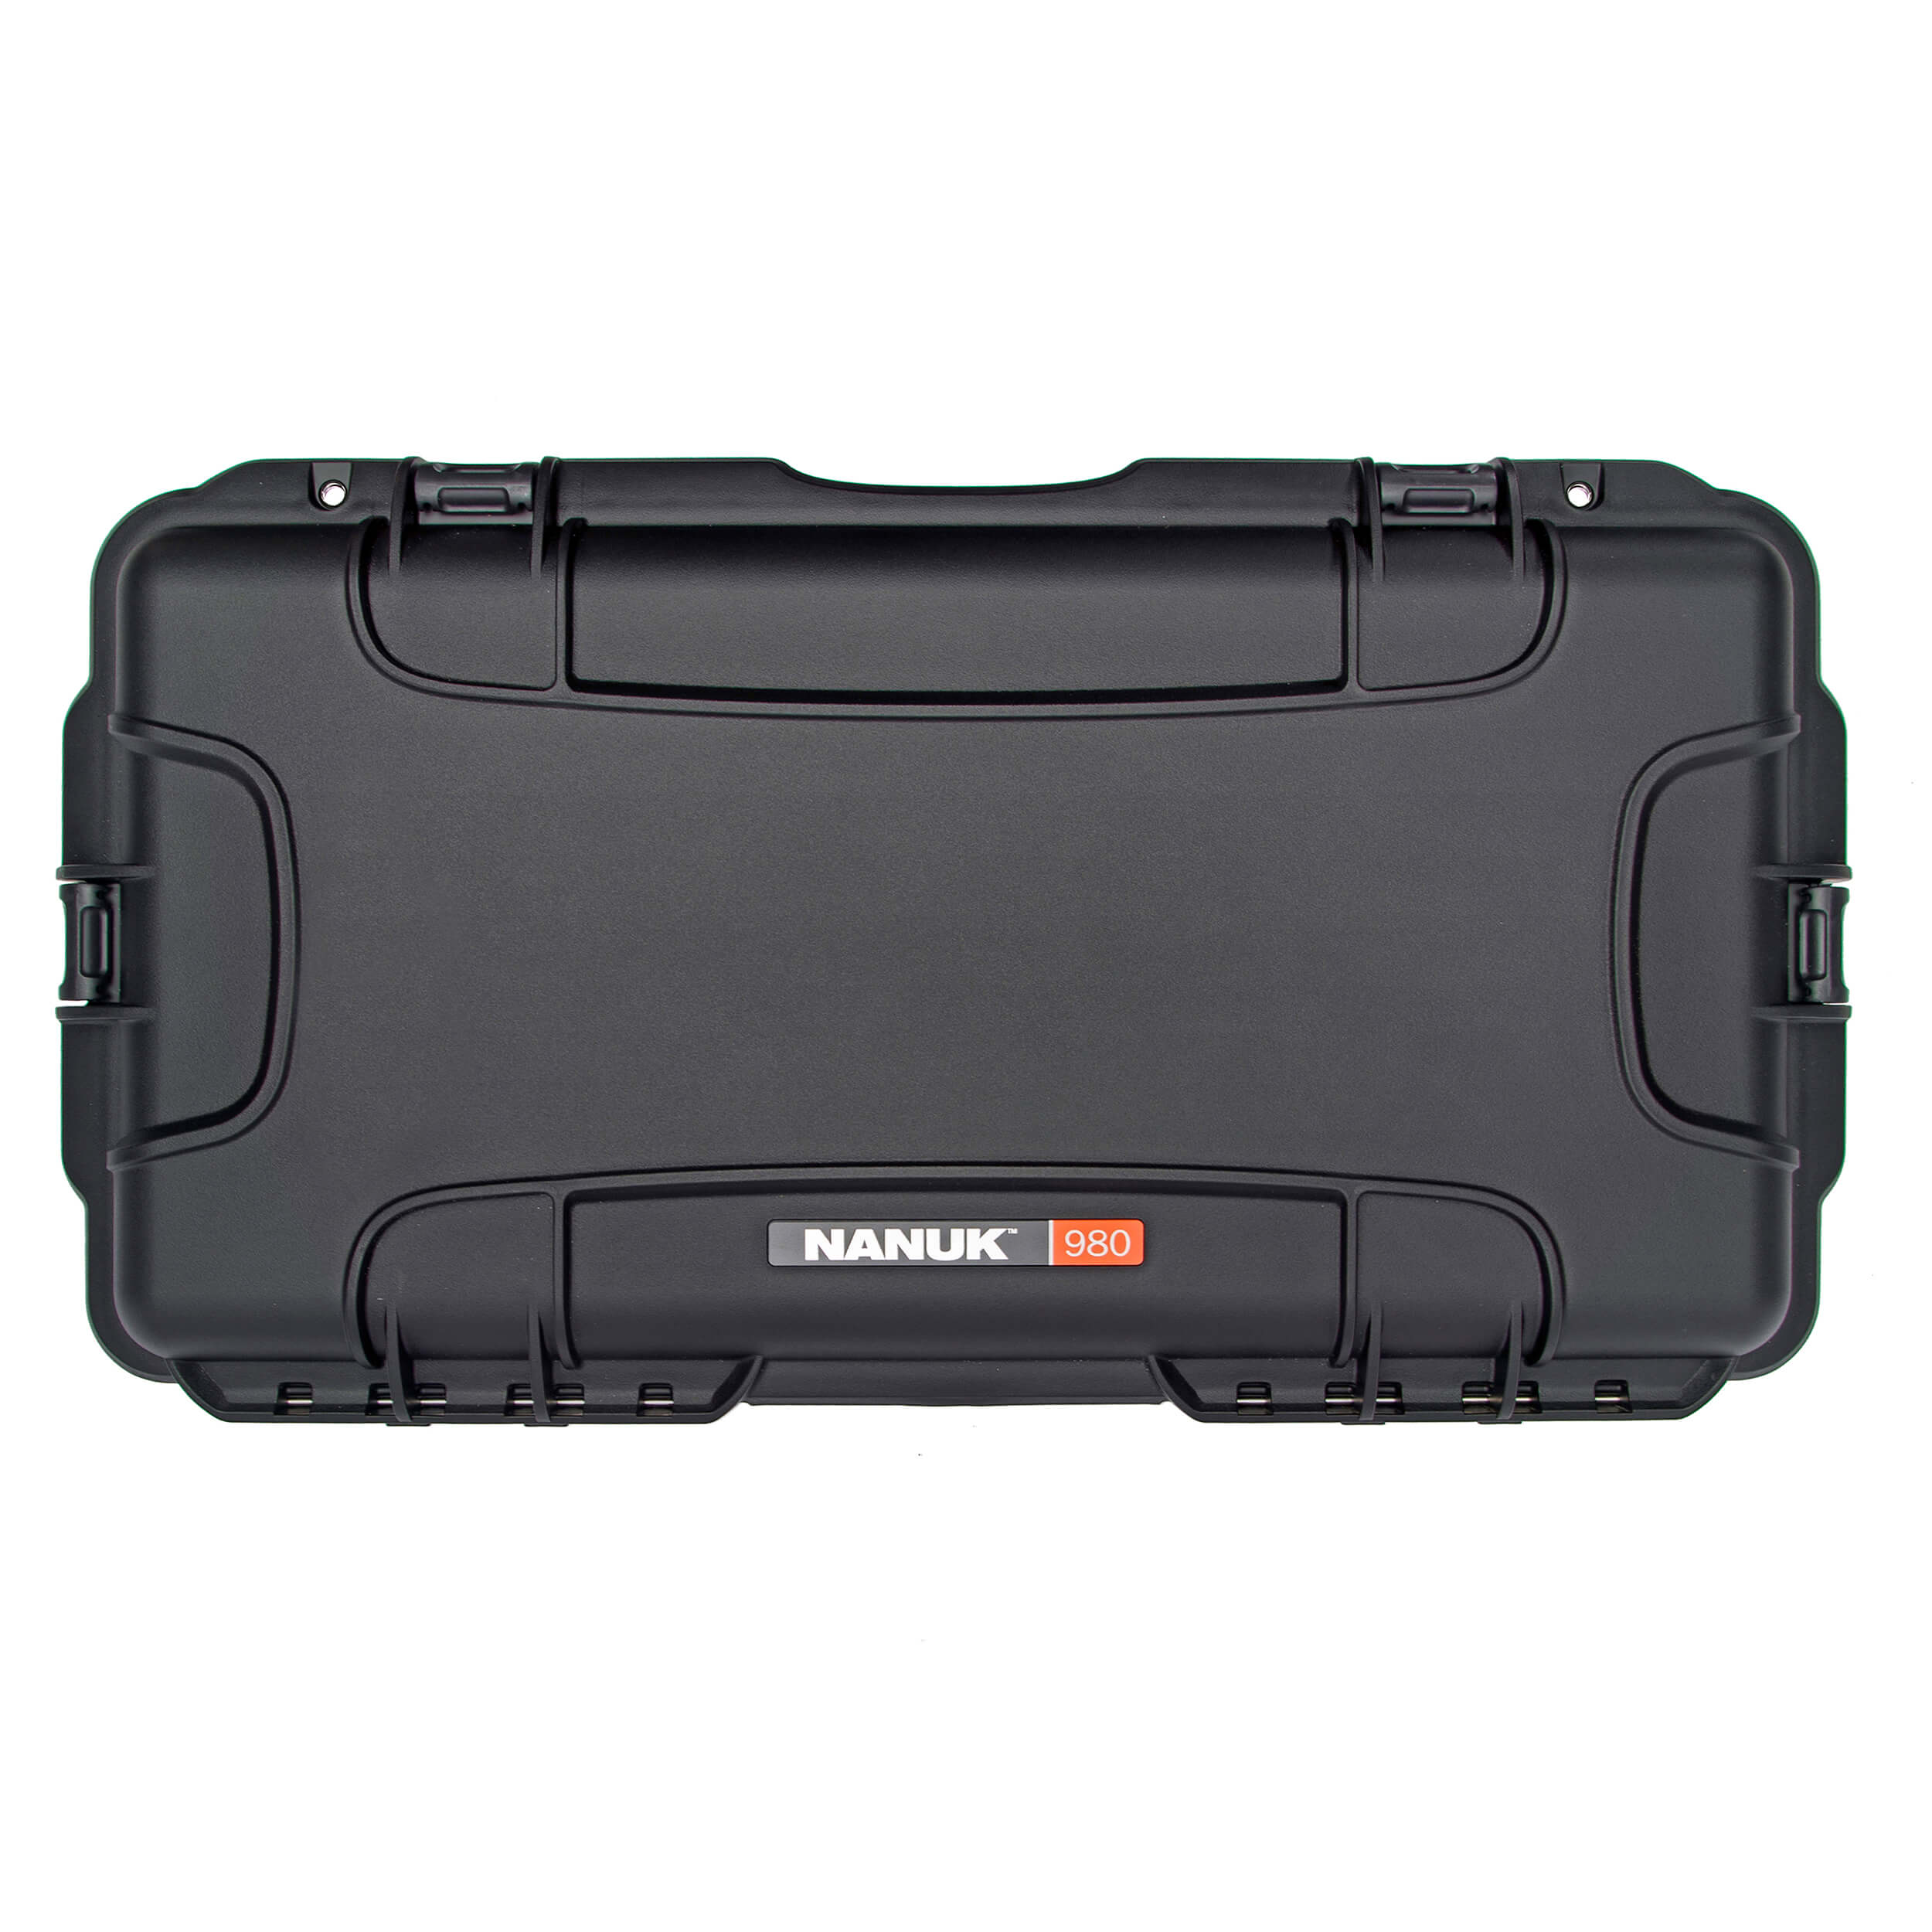 NANUK 980 valise de protection